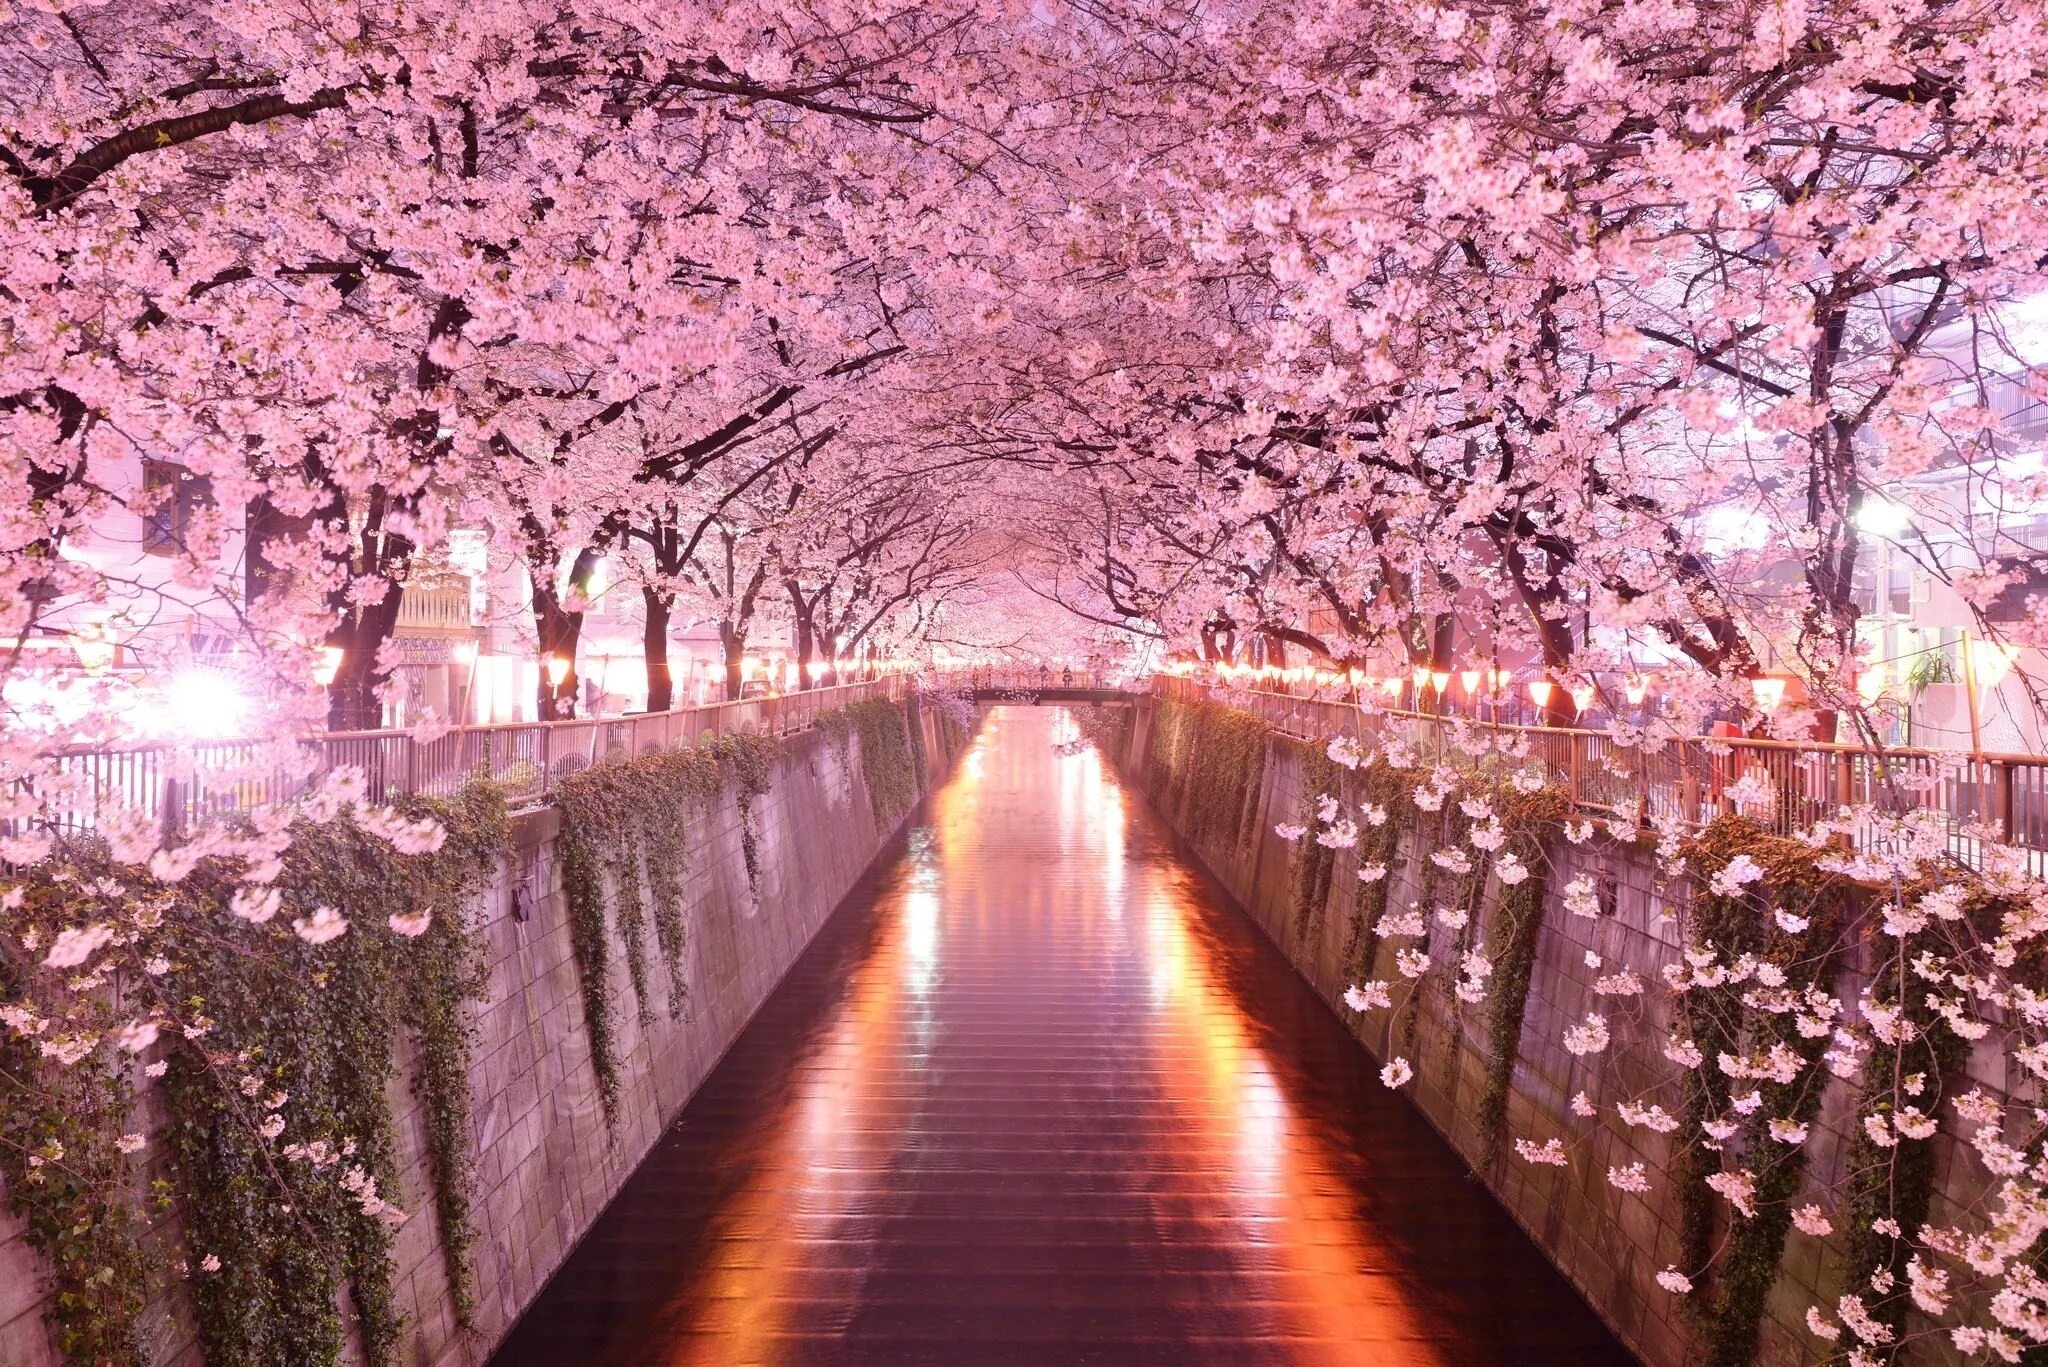 New blossom. Черри блоссом дерево. Корея черри блоссом. Цветение Сакуры в Йокогаме. Сакура черри блоссом.